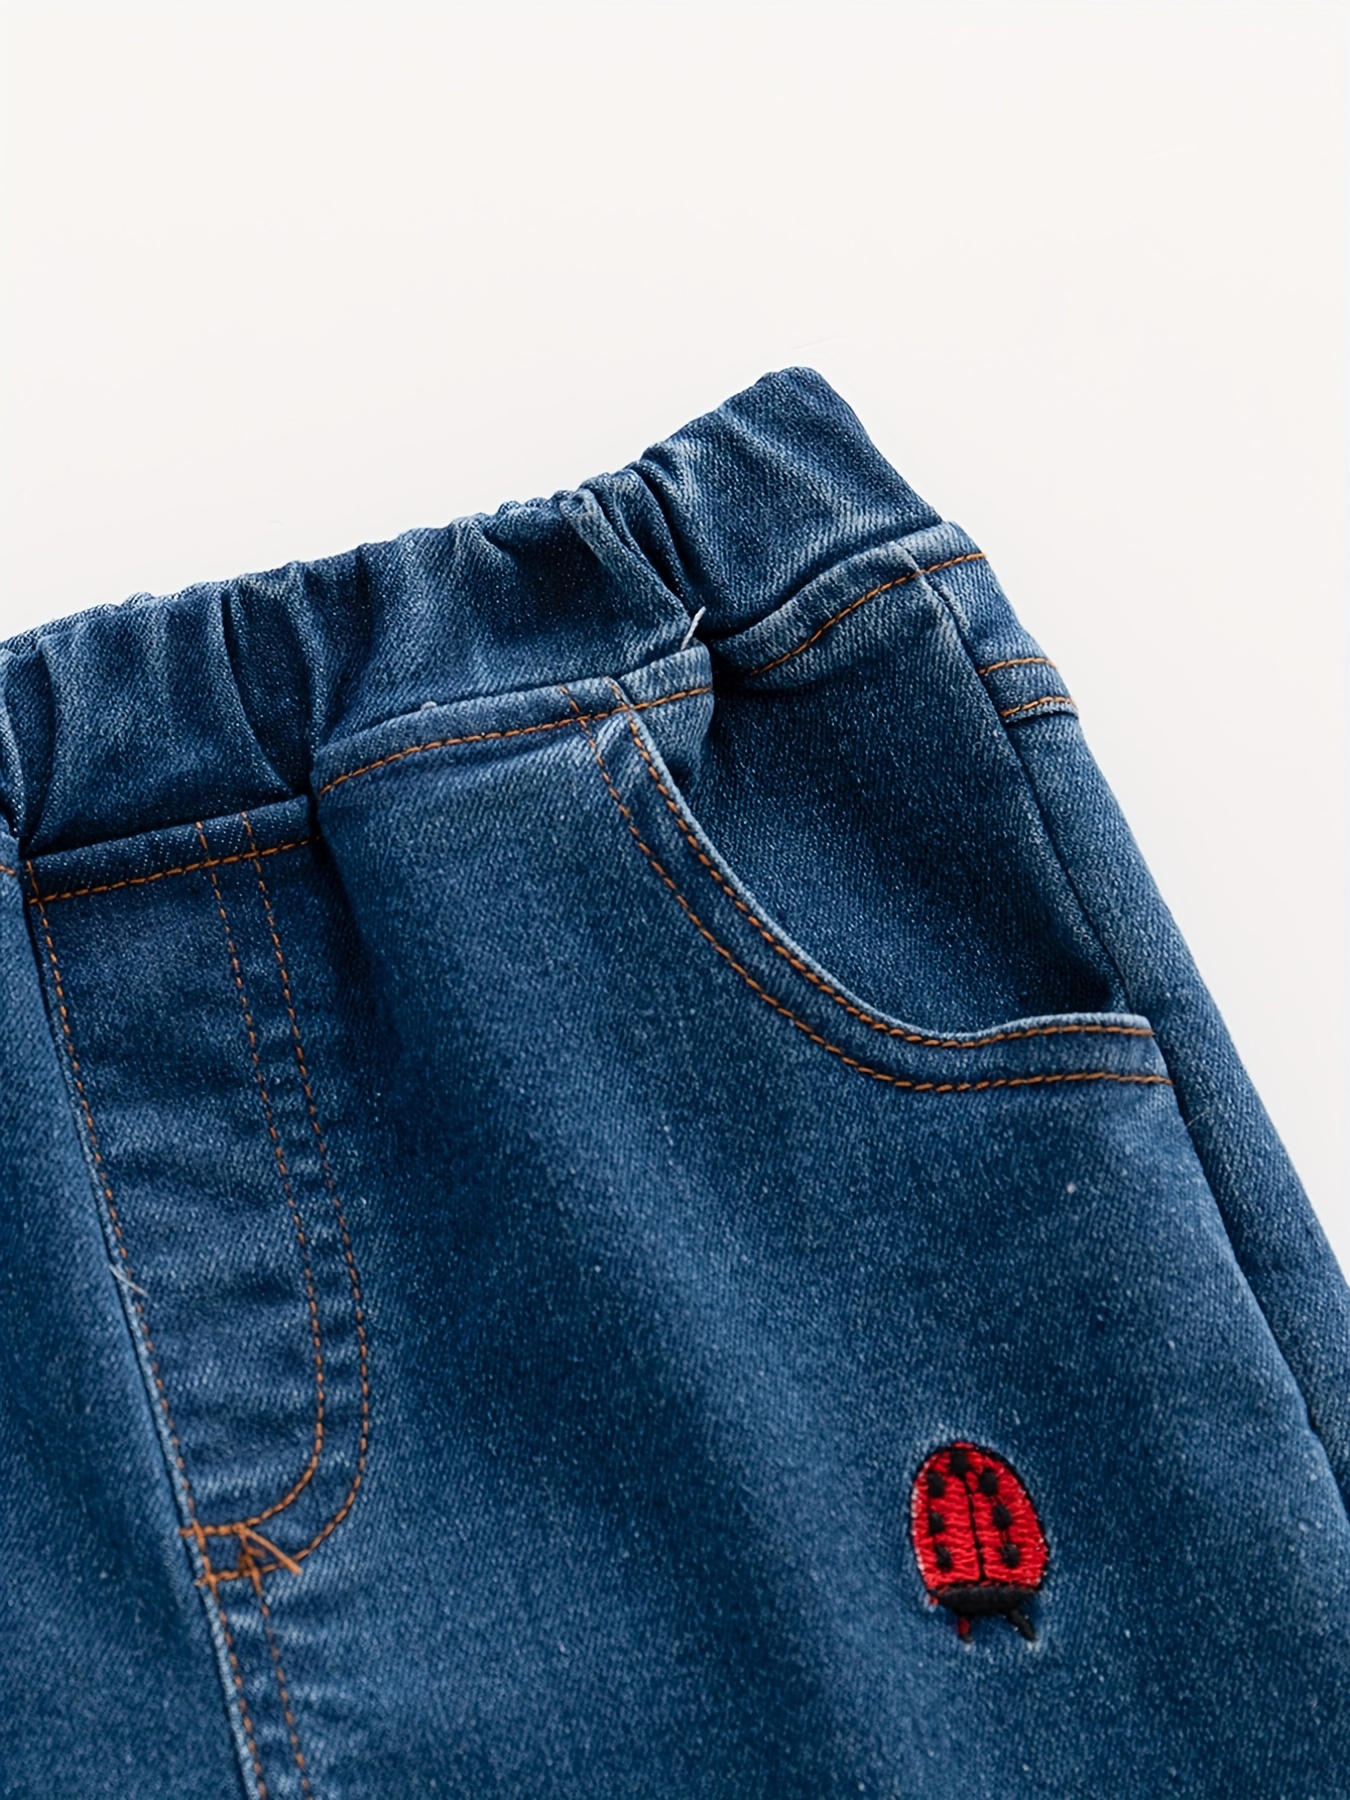 Embroidered jeans - Denim blue/Bees - Kids